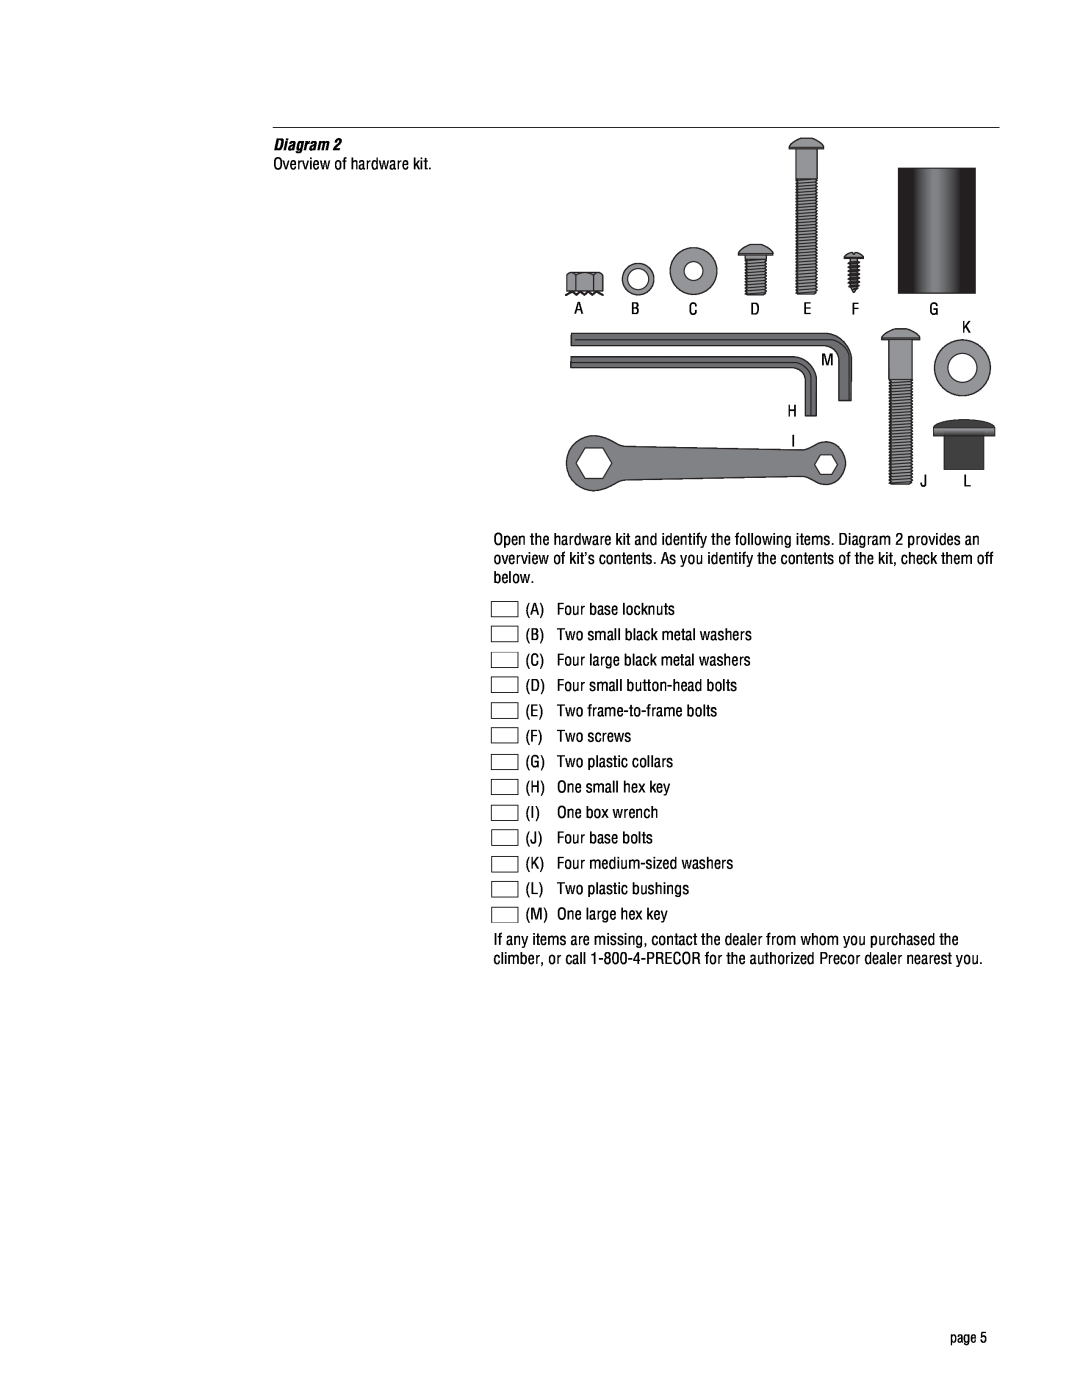 Precor 719e owner manual Diagram, Overview of hardware kit A B C D E F G K M H I J L 